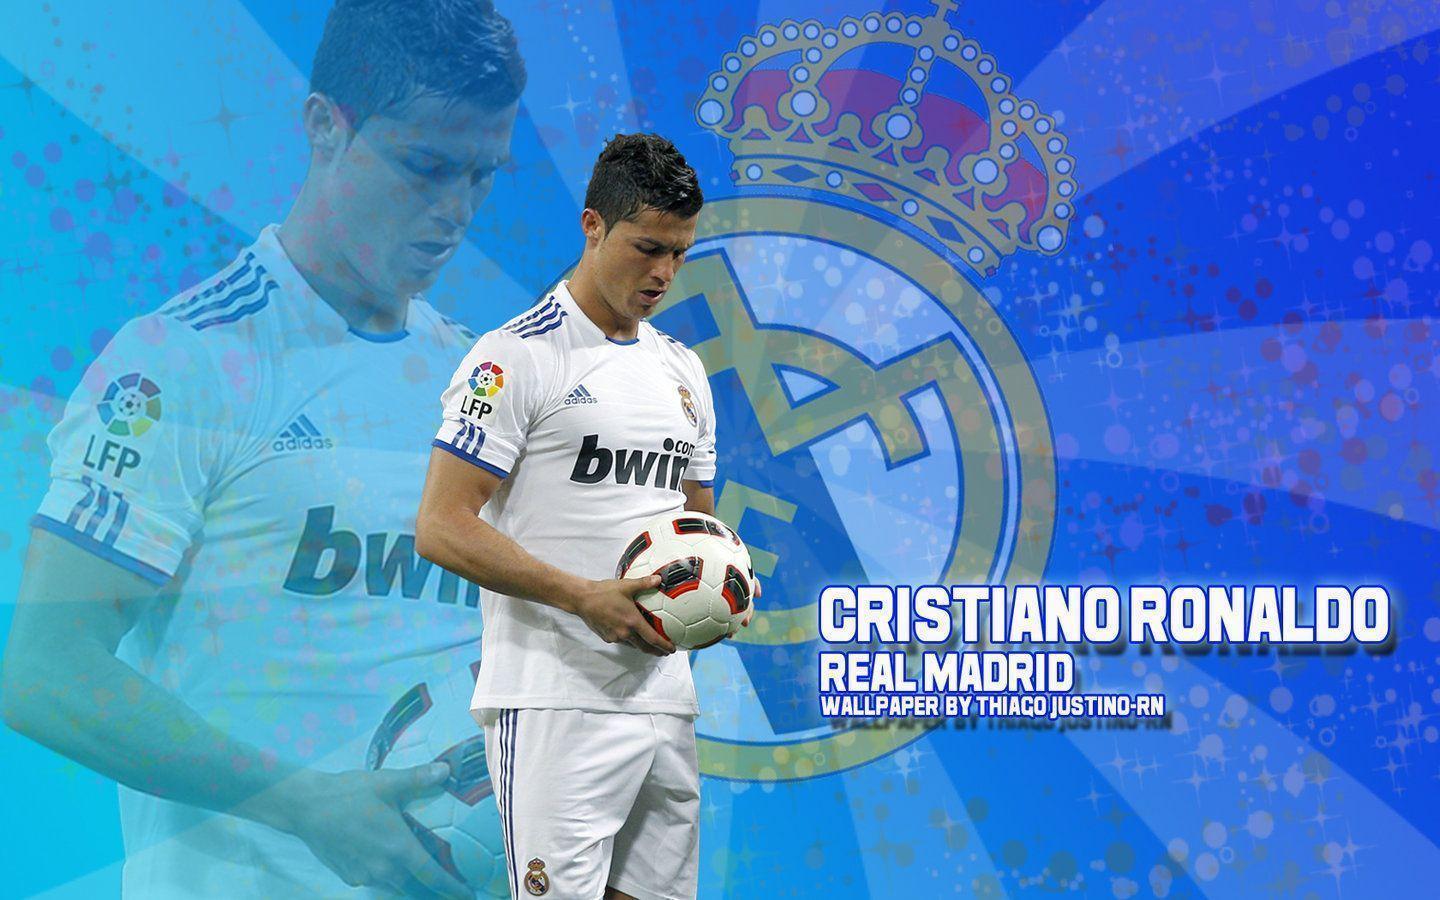 Cristiano Ronaldo Real Madrid 2014 Wallpaper. Football